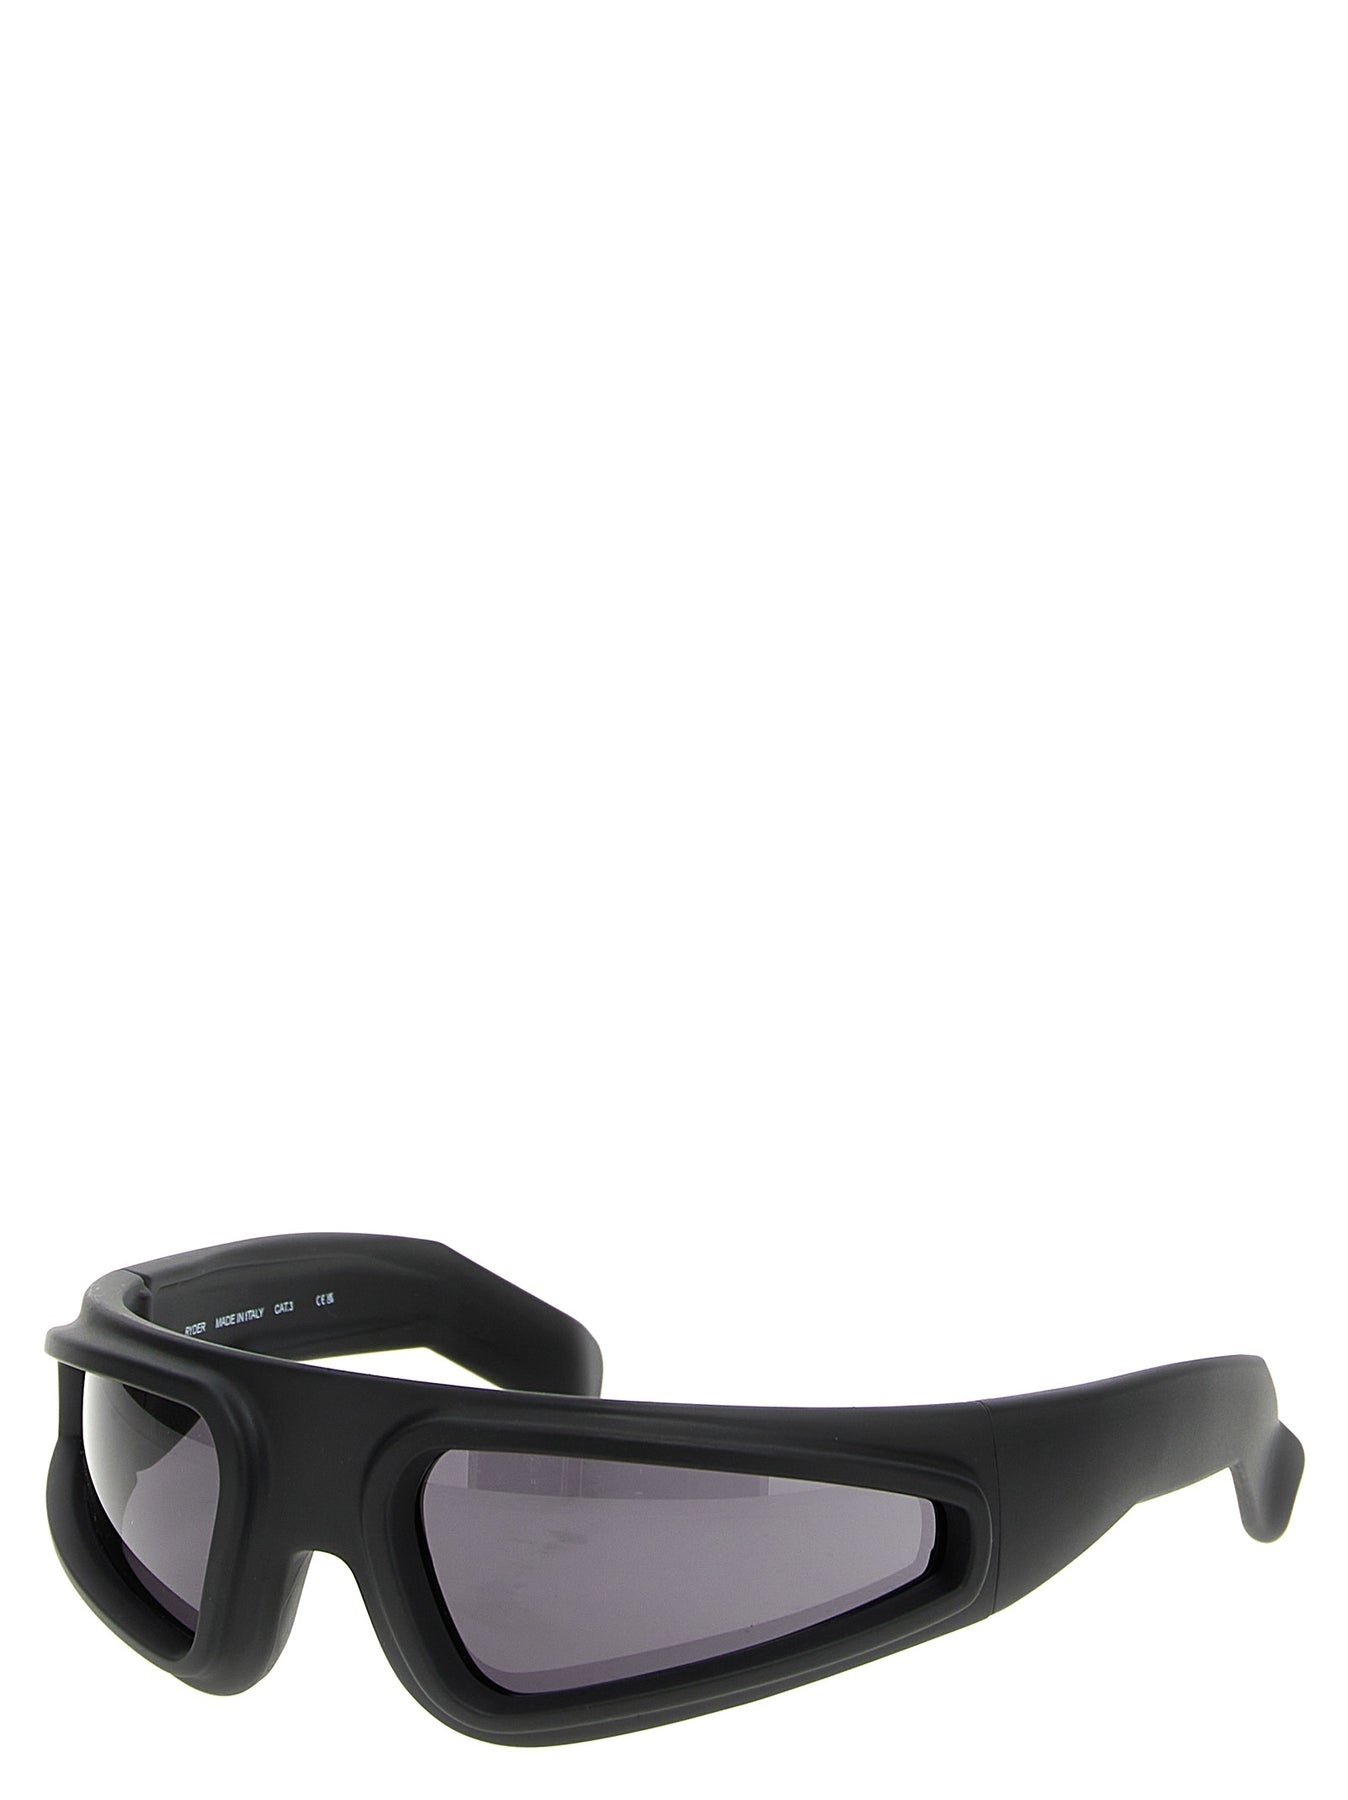 Ryder Sunglasses Black - 3